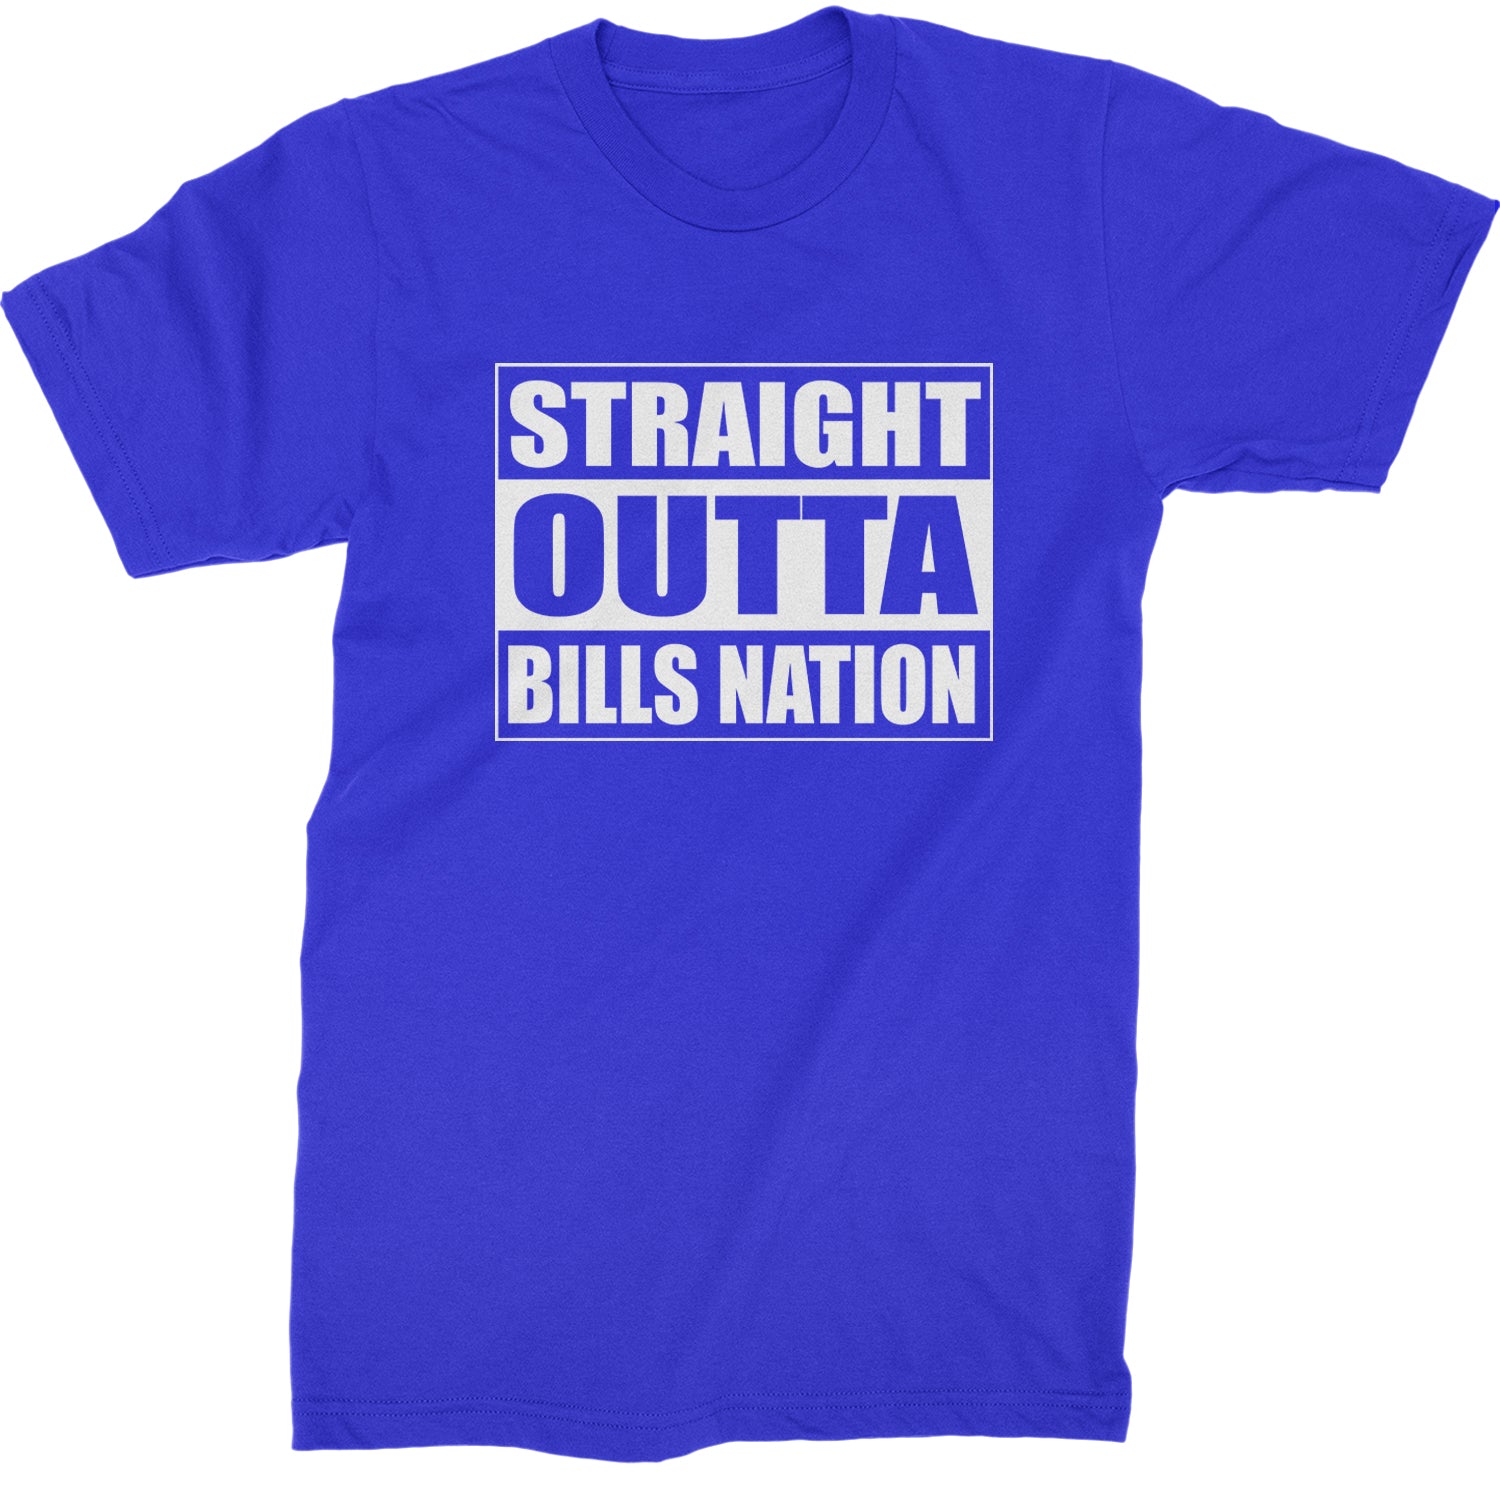 Straight Outta Bills Nation  Mens T-shirt Royal Blue